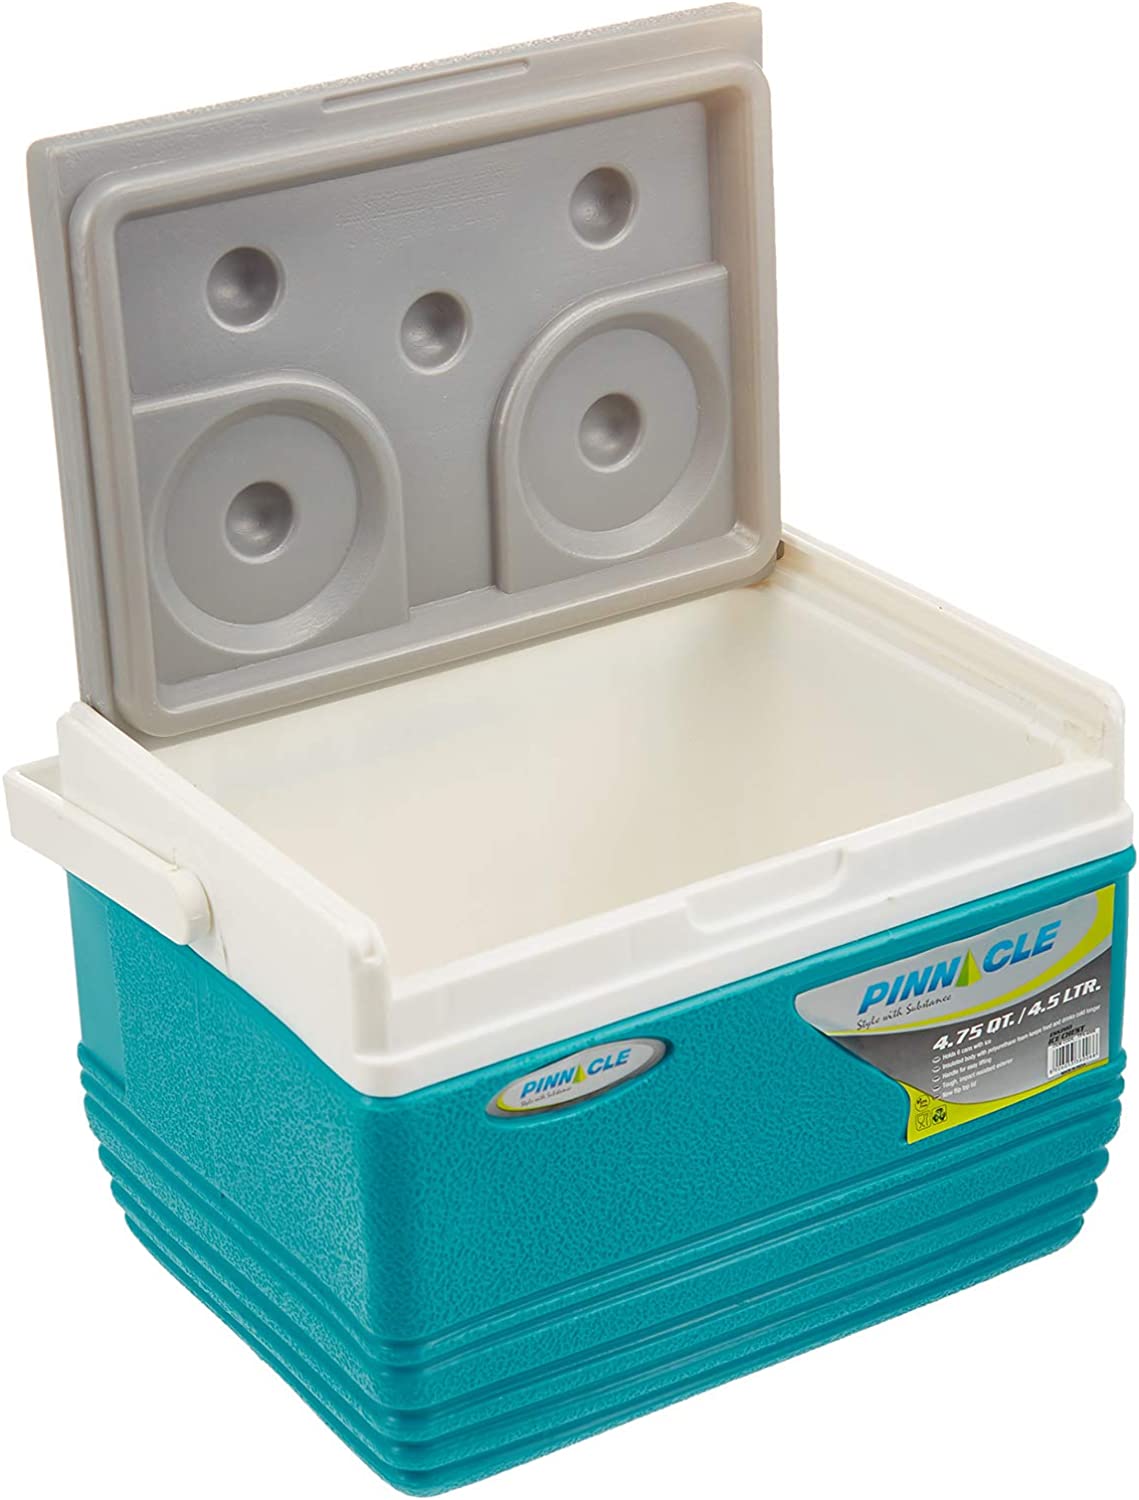 Pinnacle Cooler Ice Box & Cooler Chiller Jug Set - Blue & Grey - 3 Piece HOG-Home Office Garden online marketplace.